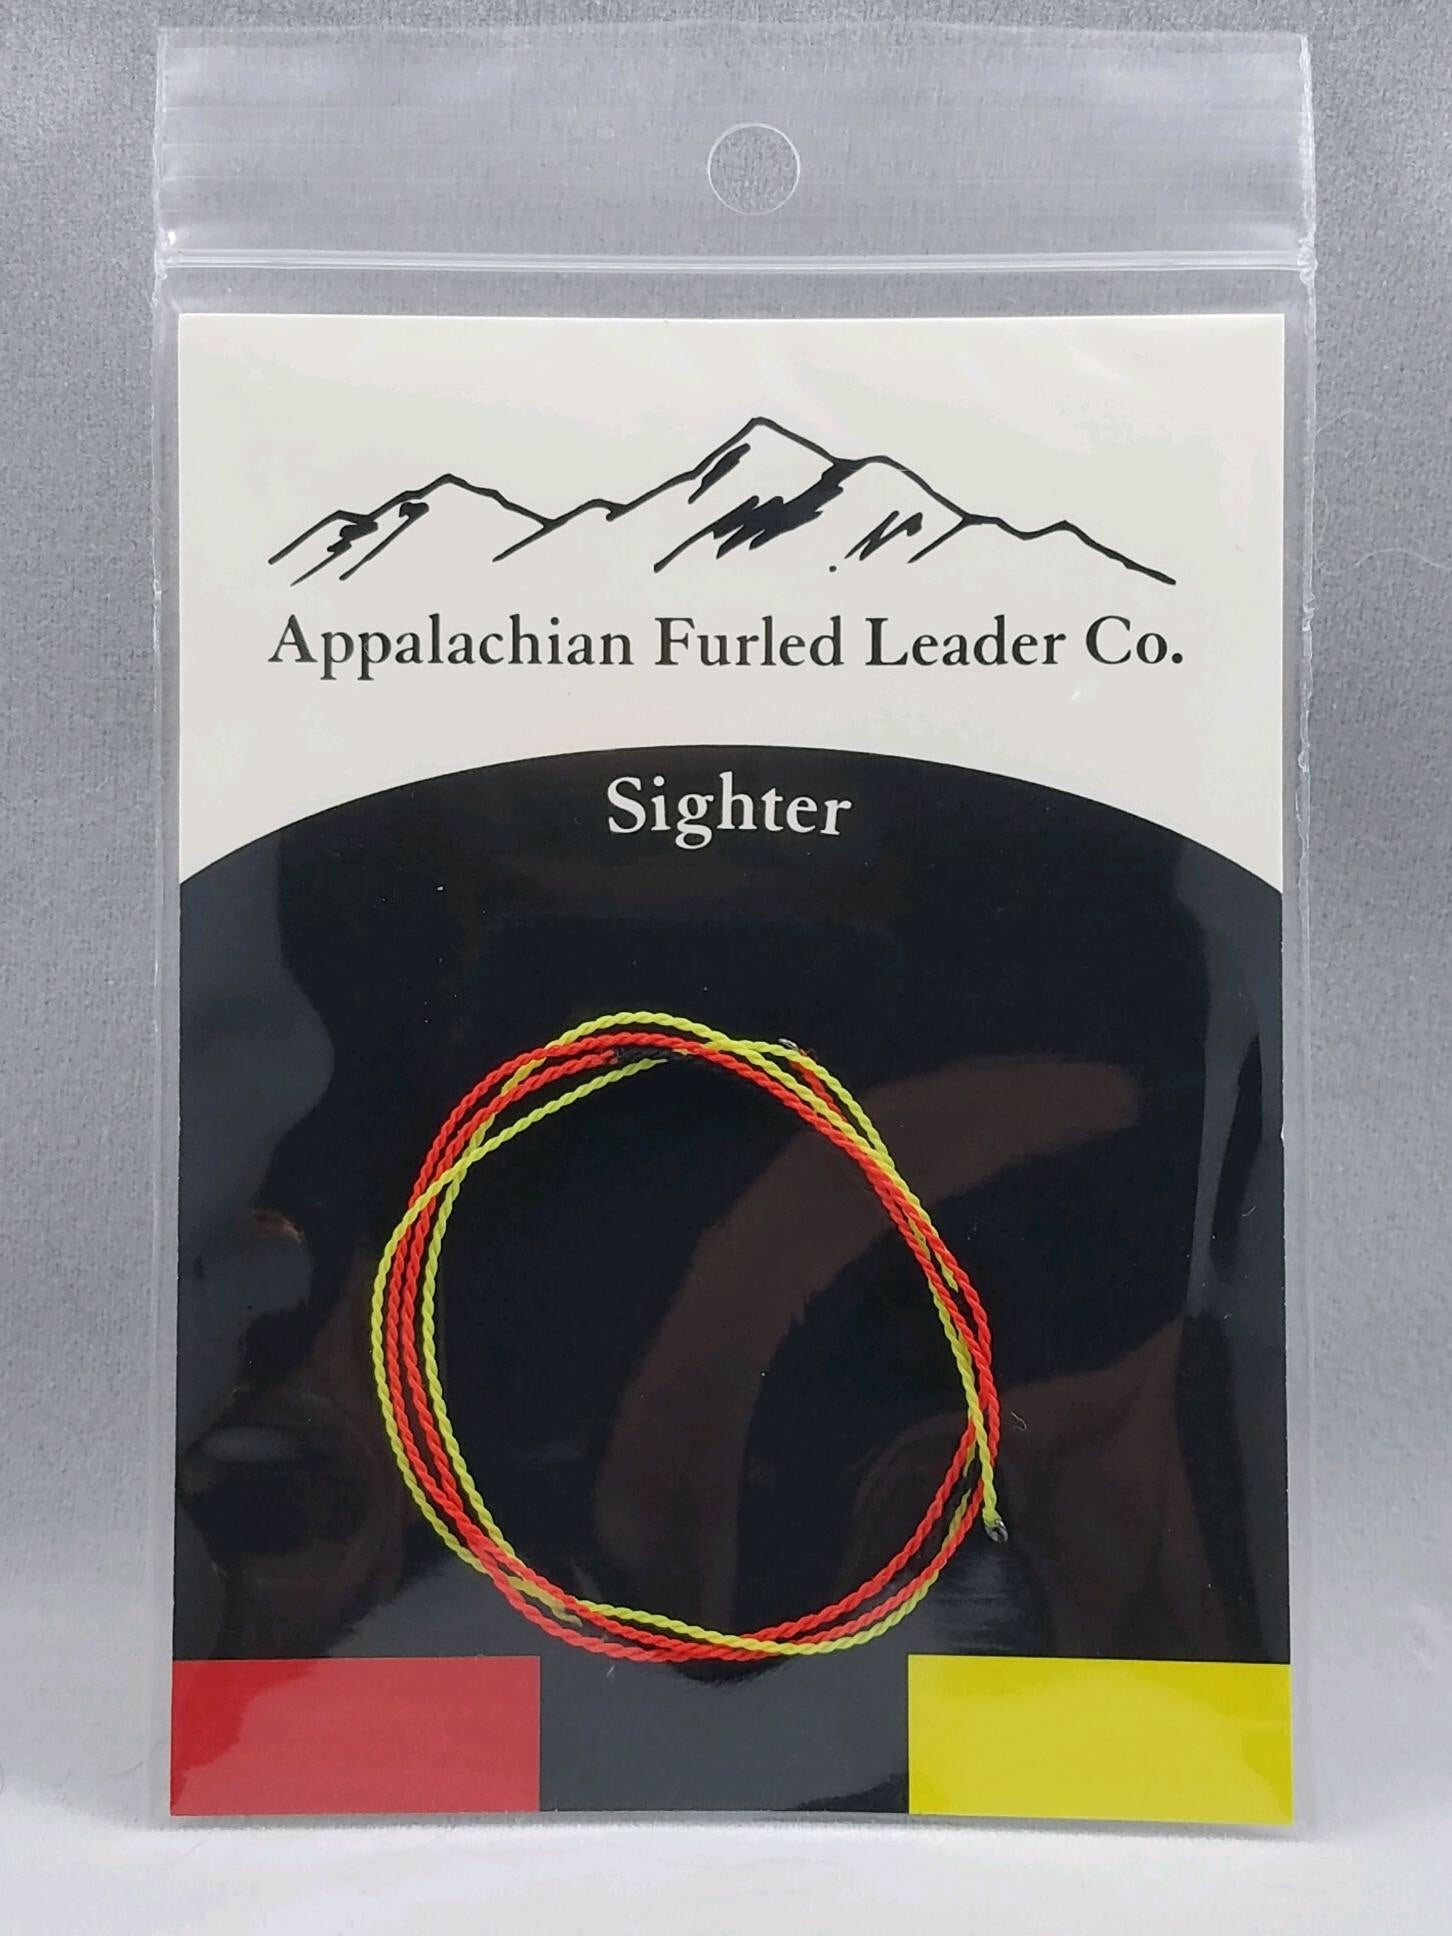 Sighter – Appalachian Furled Leader Company